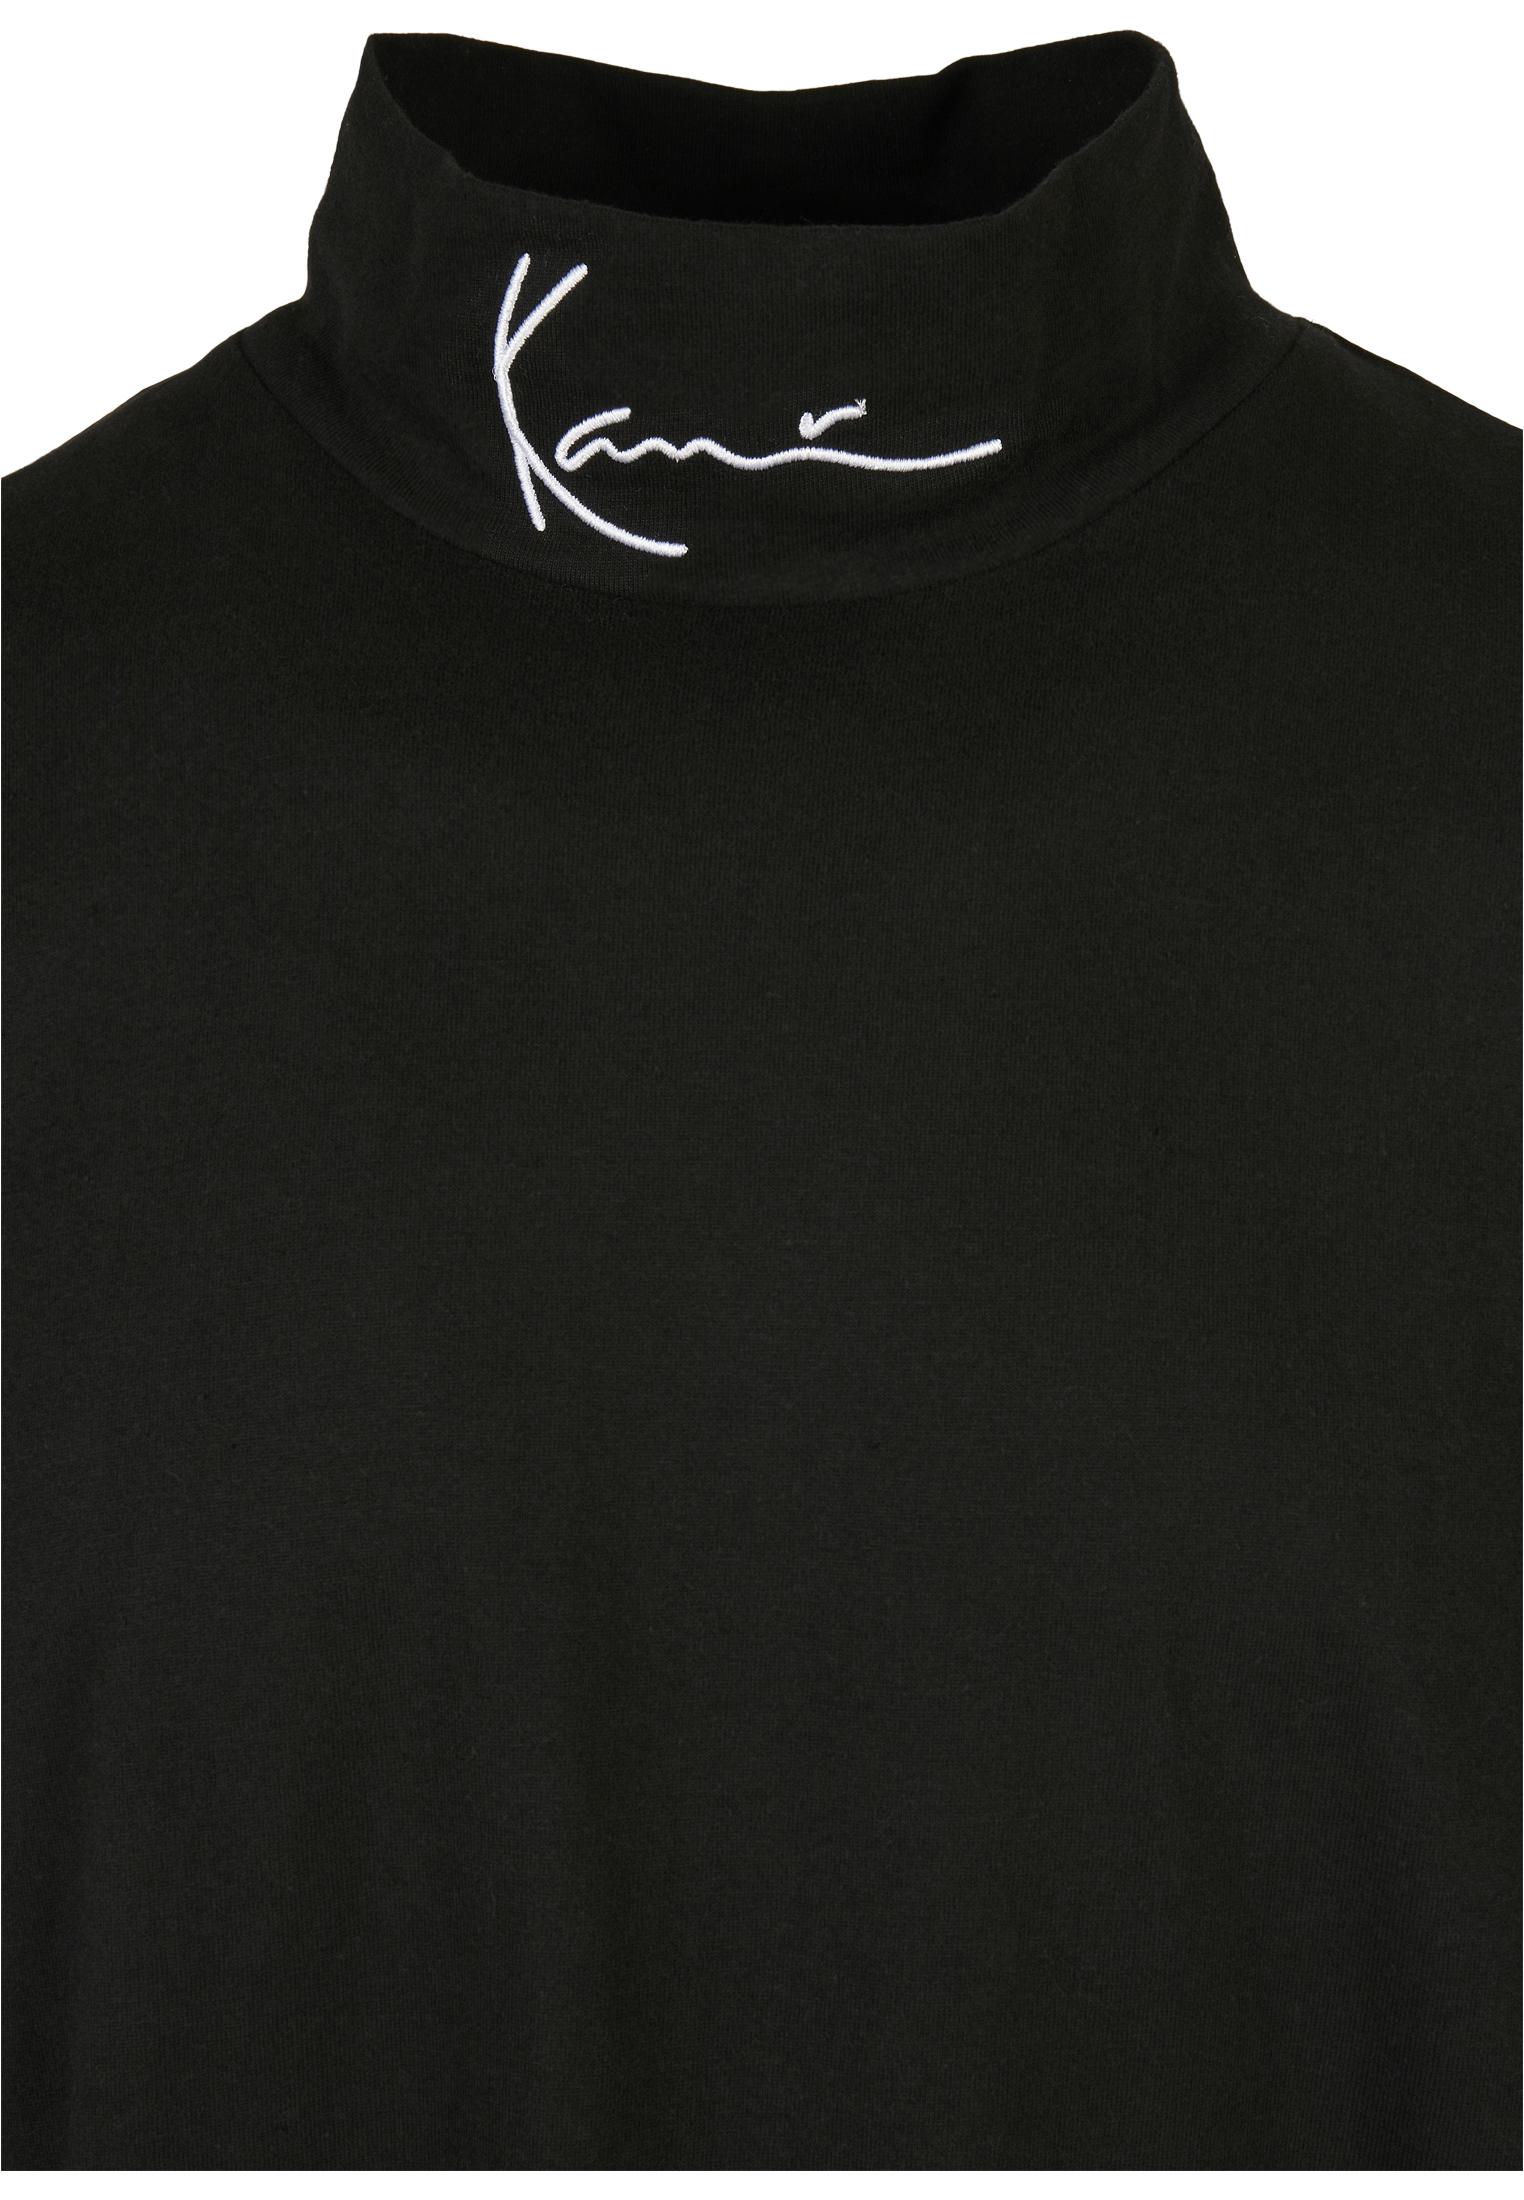 Karl Kani KU214-025-2 Small Signature Turtle Neck LS black (Farbe: black / Größe: S)